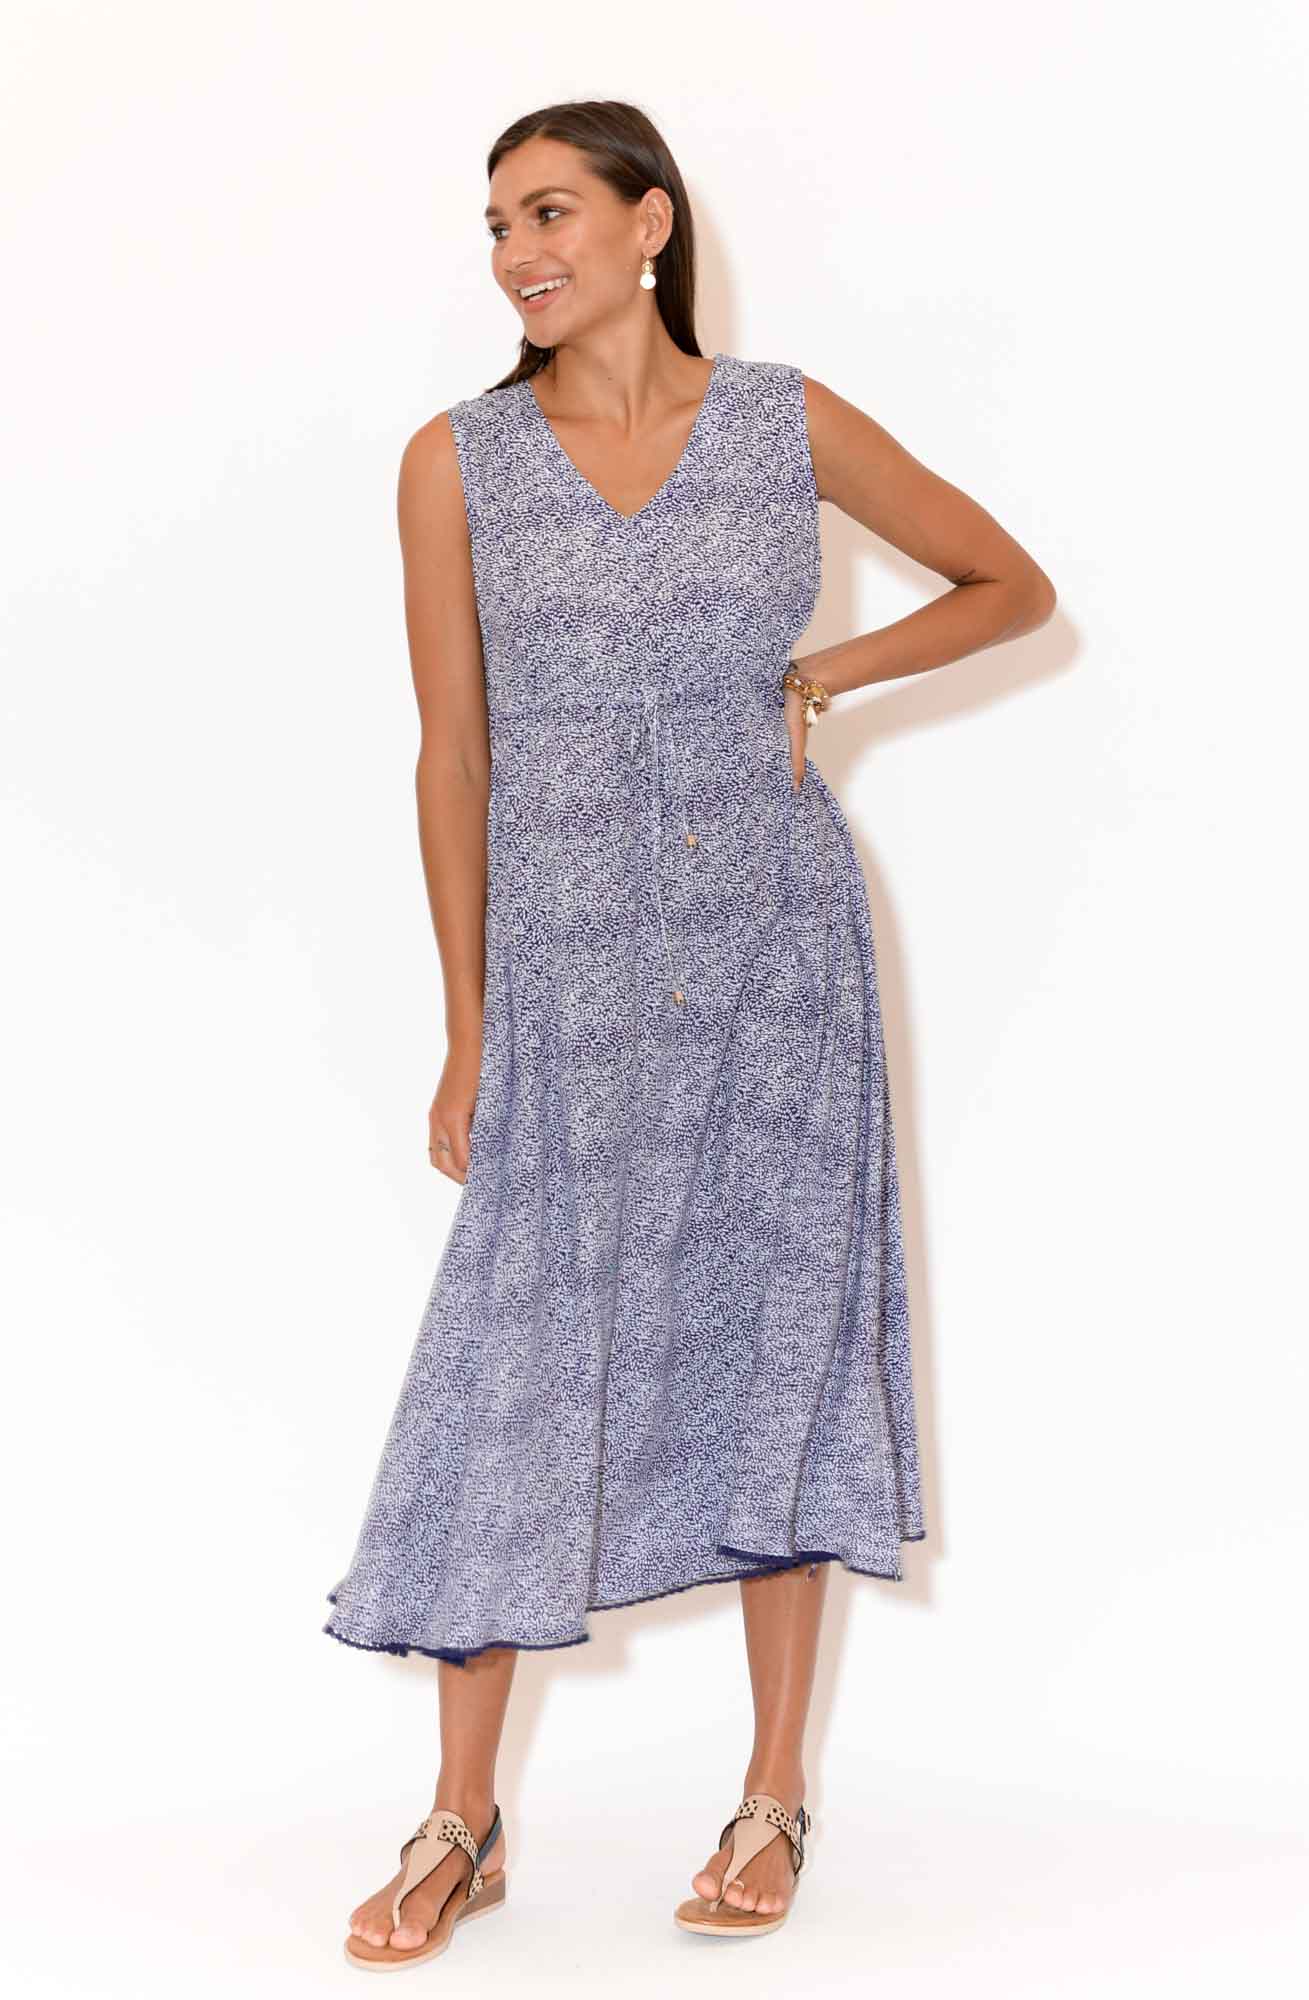 Womens Dresses Australia - Casual, Work \u0026 More Online at Blue Bungalow